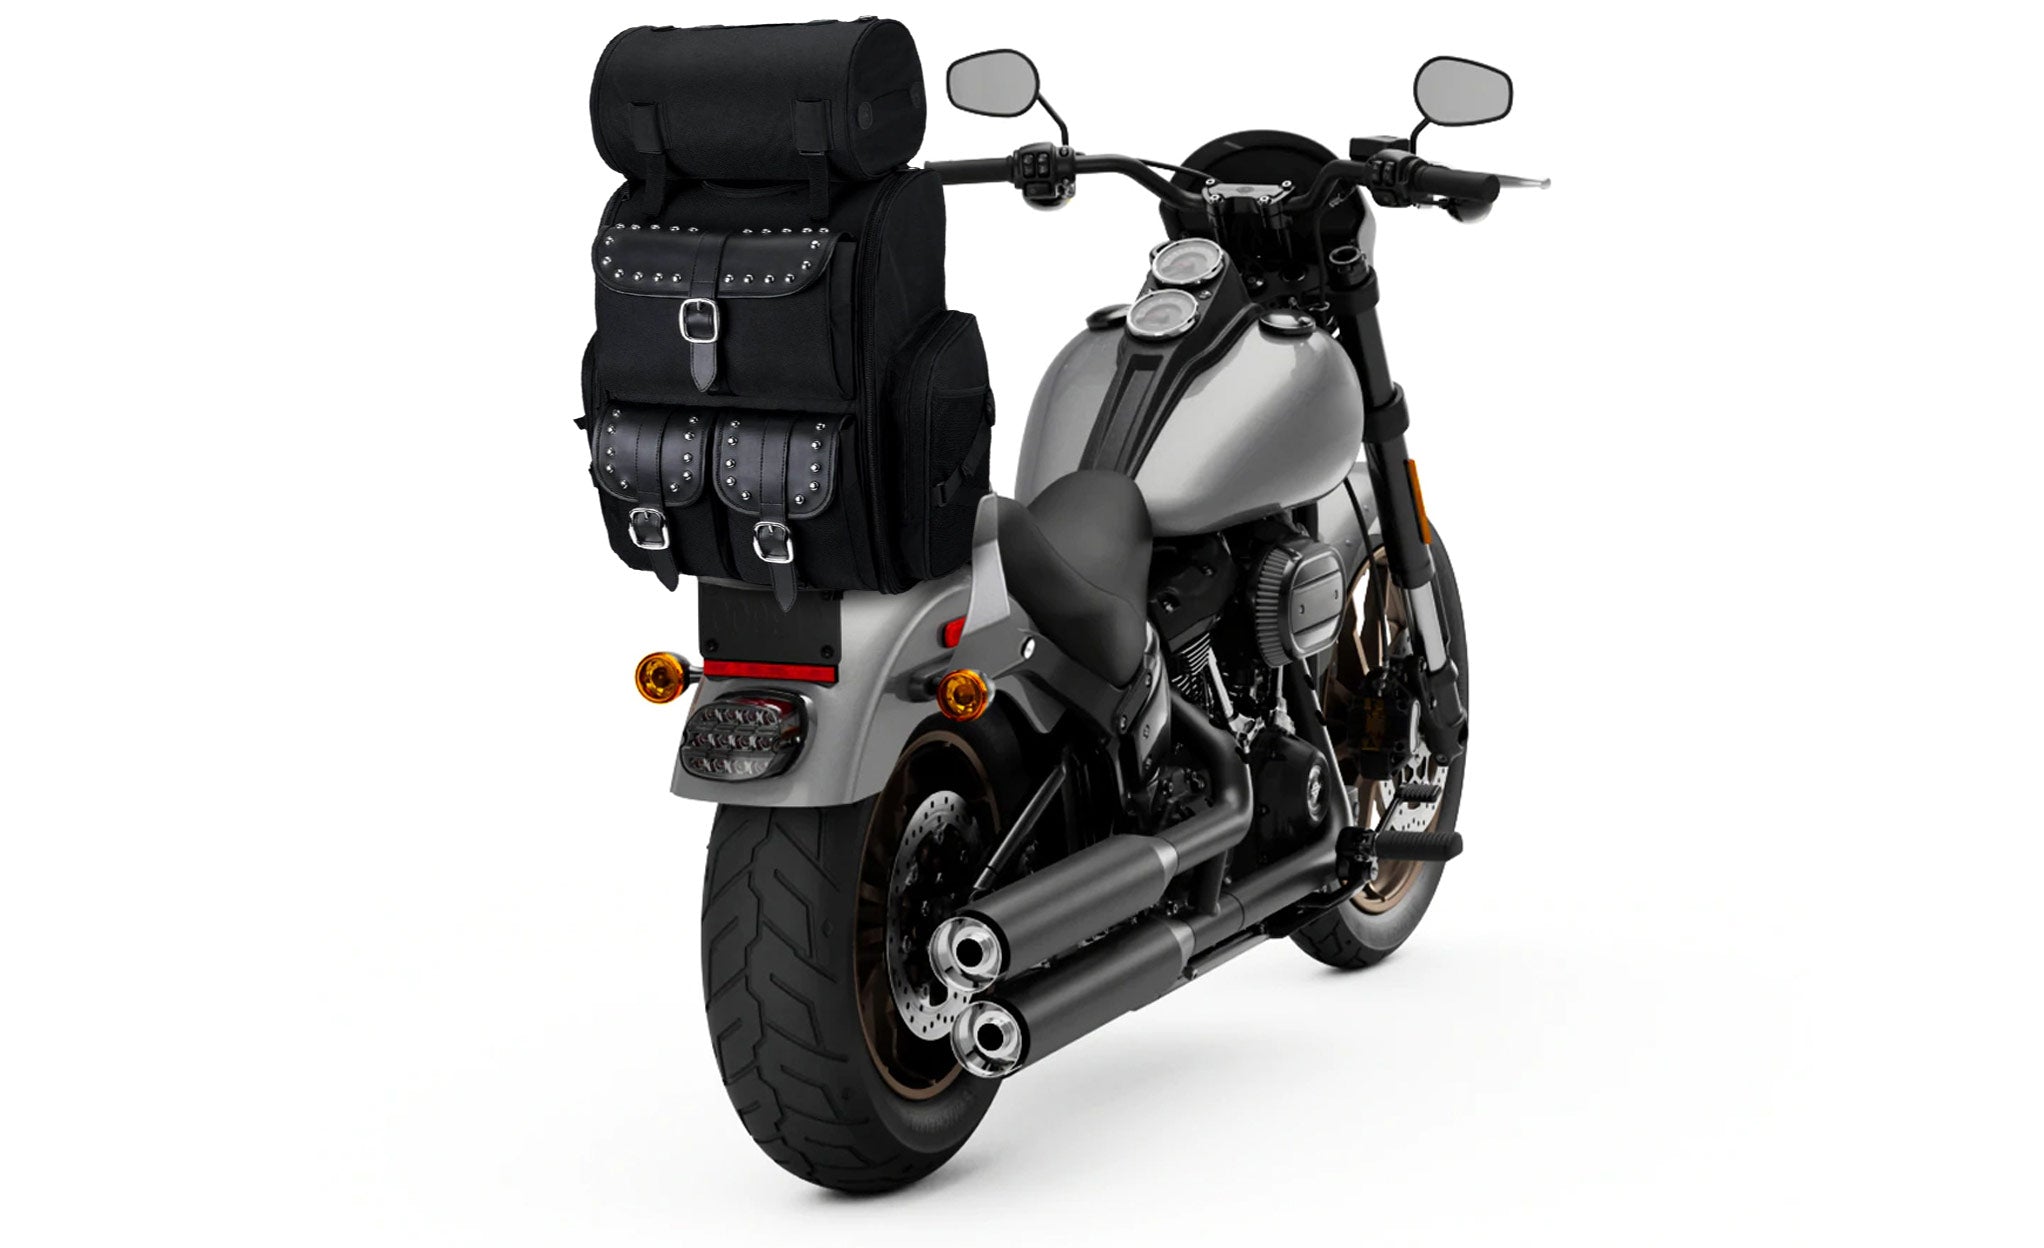 Viking Highway Extra Large Studded Honda Motorcycle Tail Bag Bag on Bike View @expand